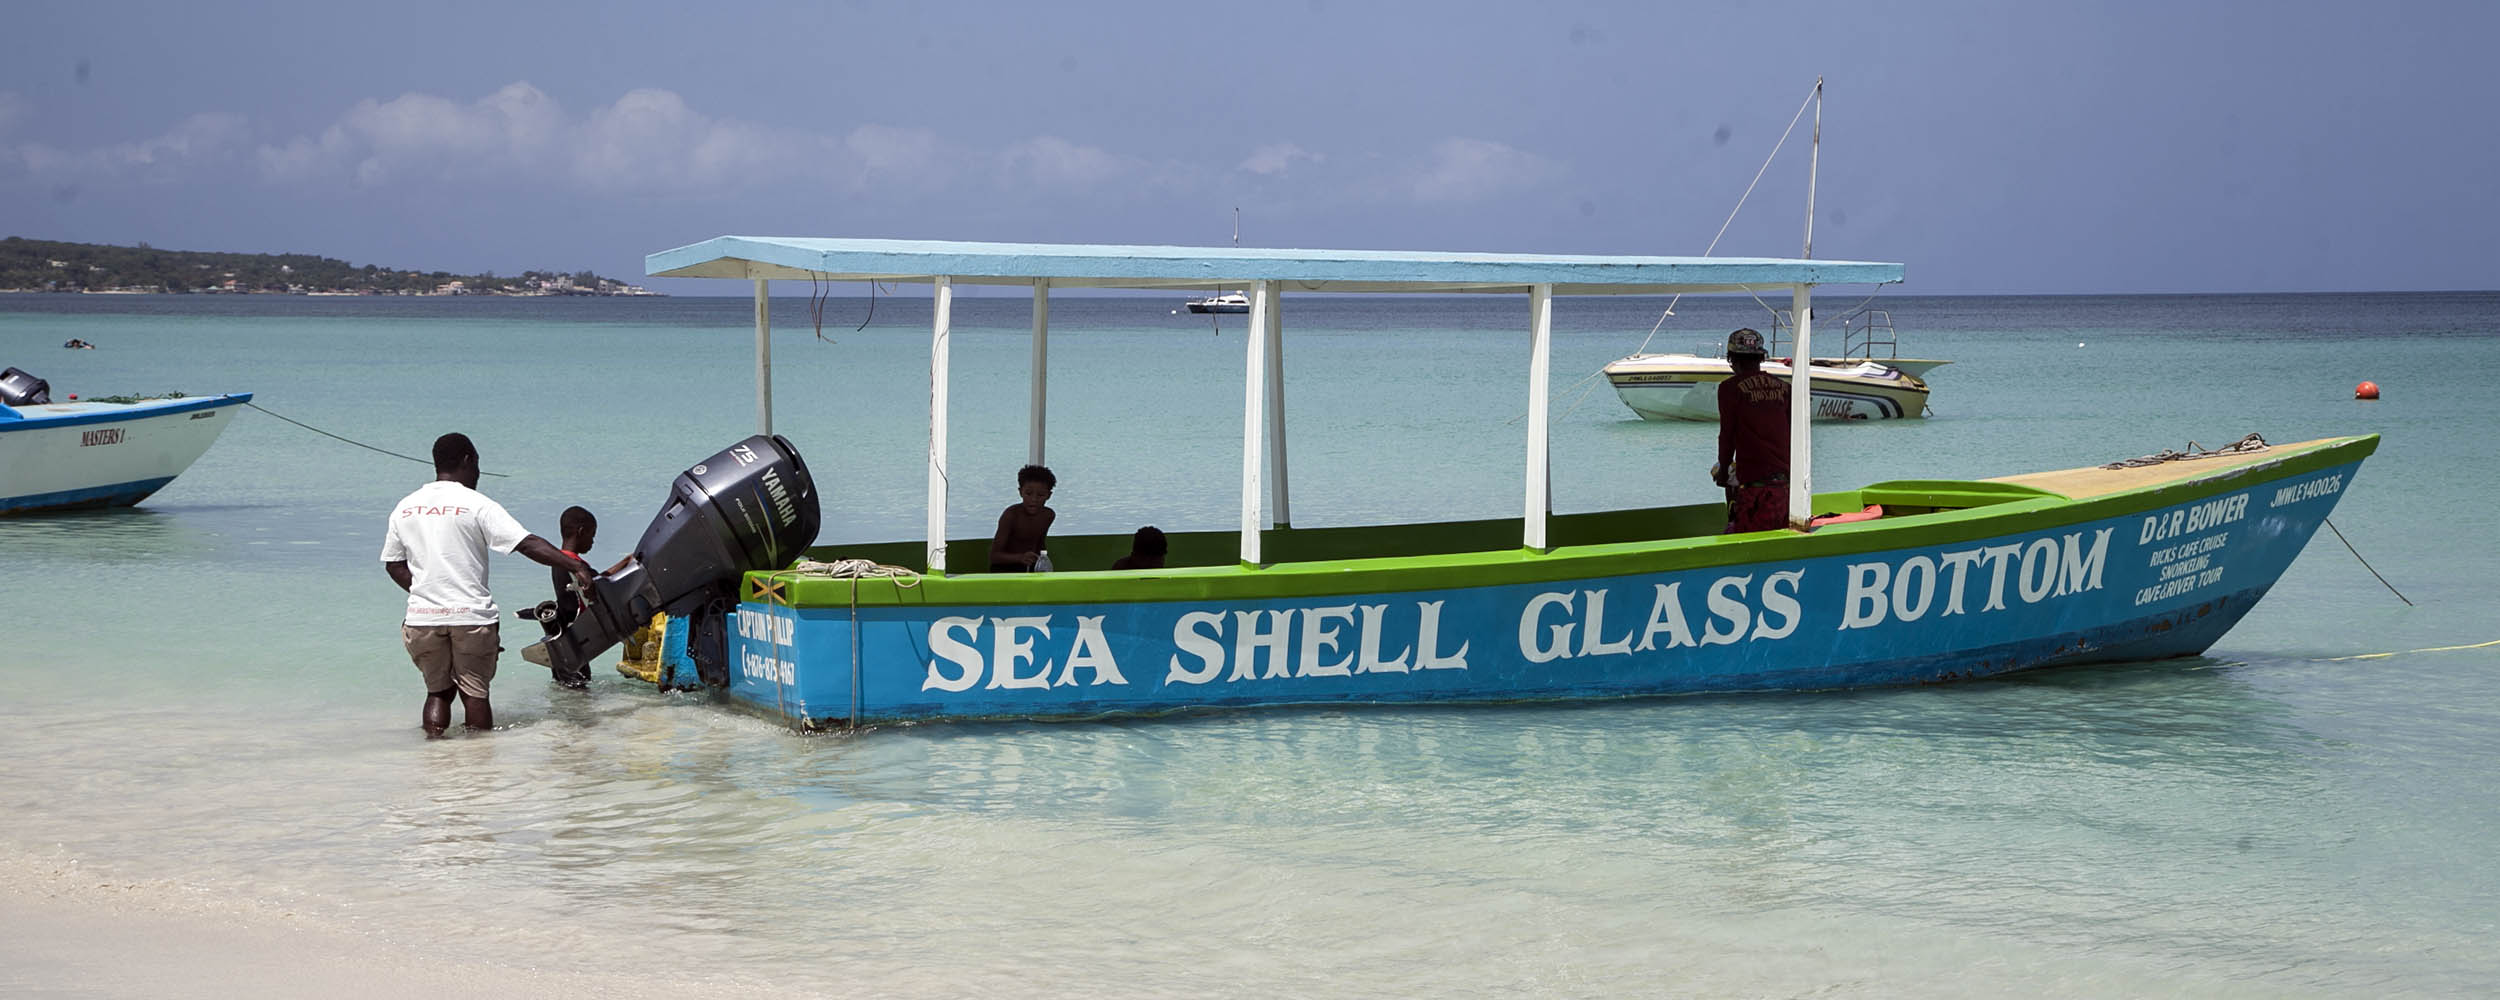 Sea Shell Glass Bottom Boat - Negril Beach, Negril Jamaica